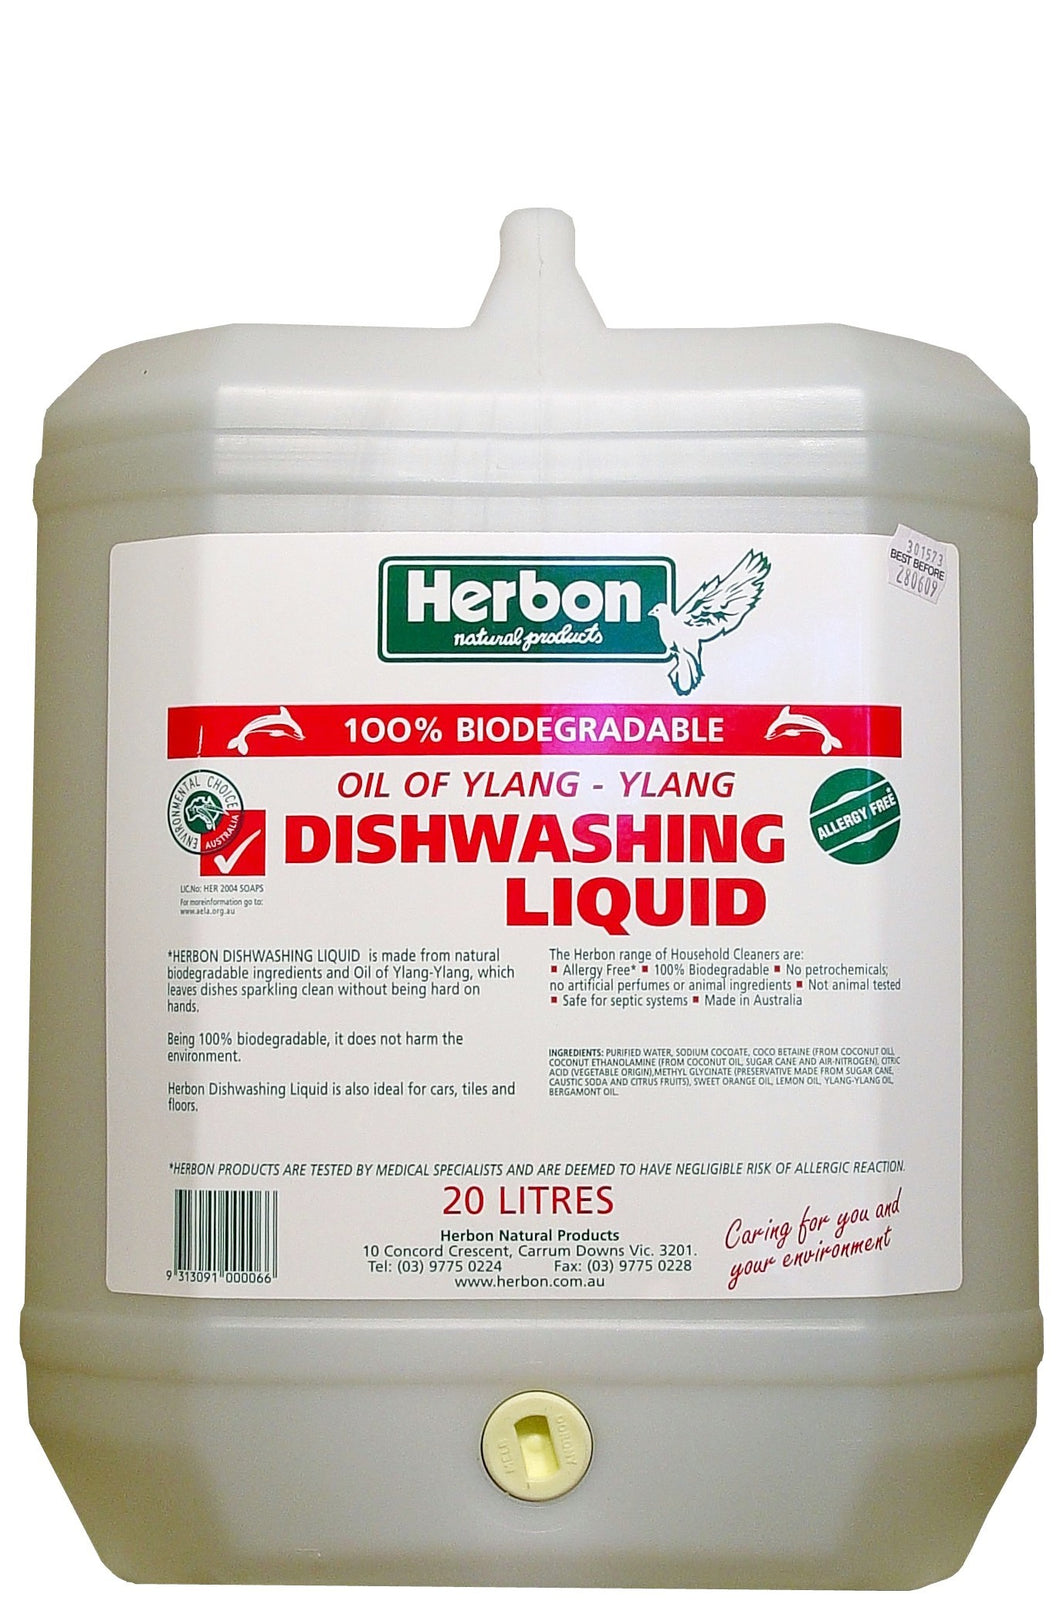 Herbon, Dishwashing Liquid, Oil of Ylang, Dishwashing Liquid, Fragrance Free, Naturally Biodegradable, 20 Litres